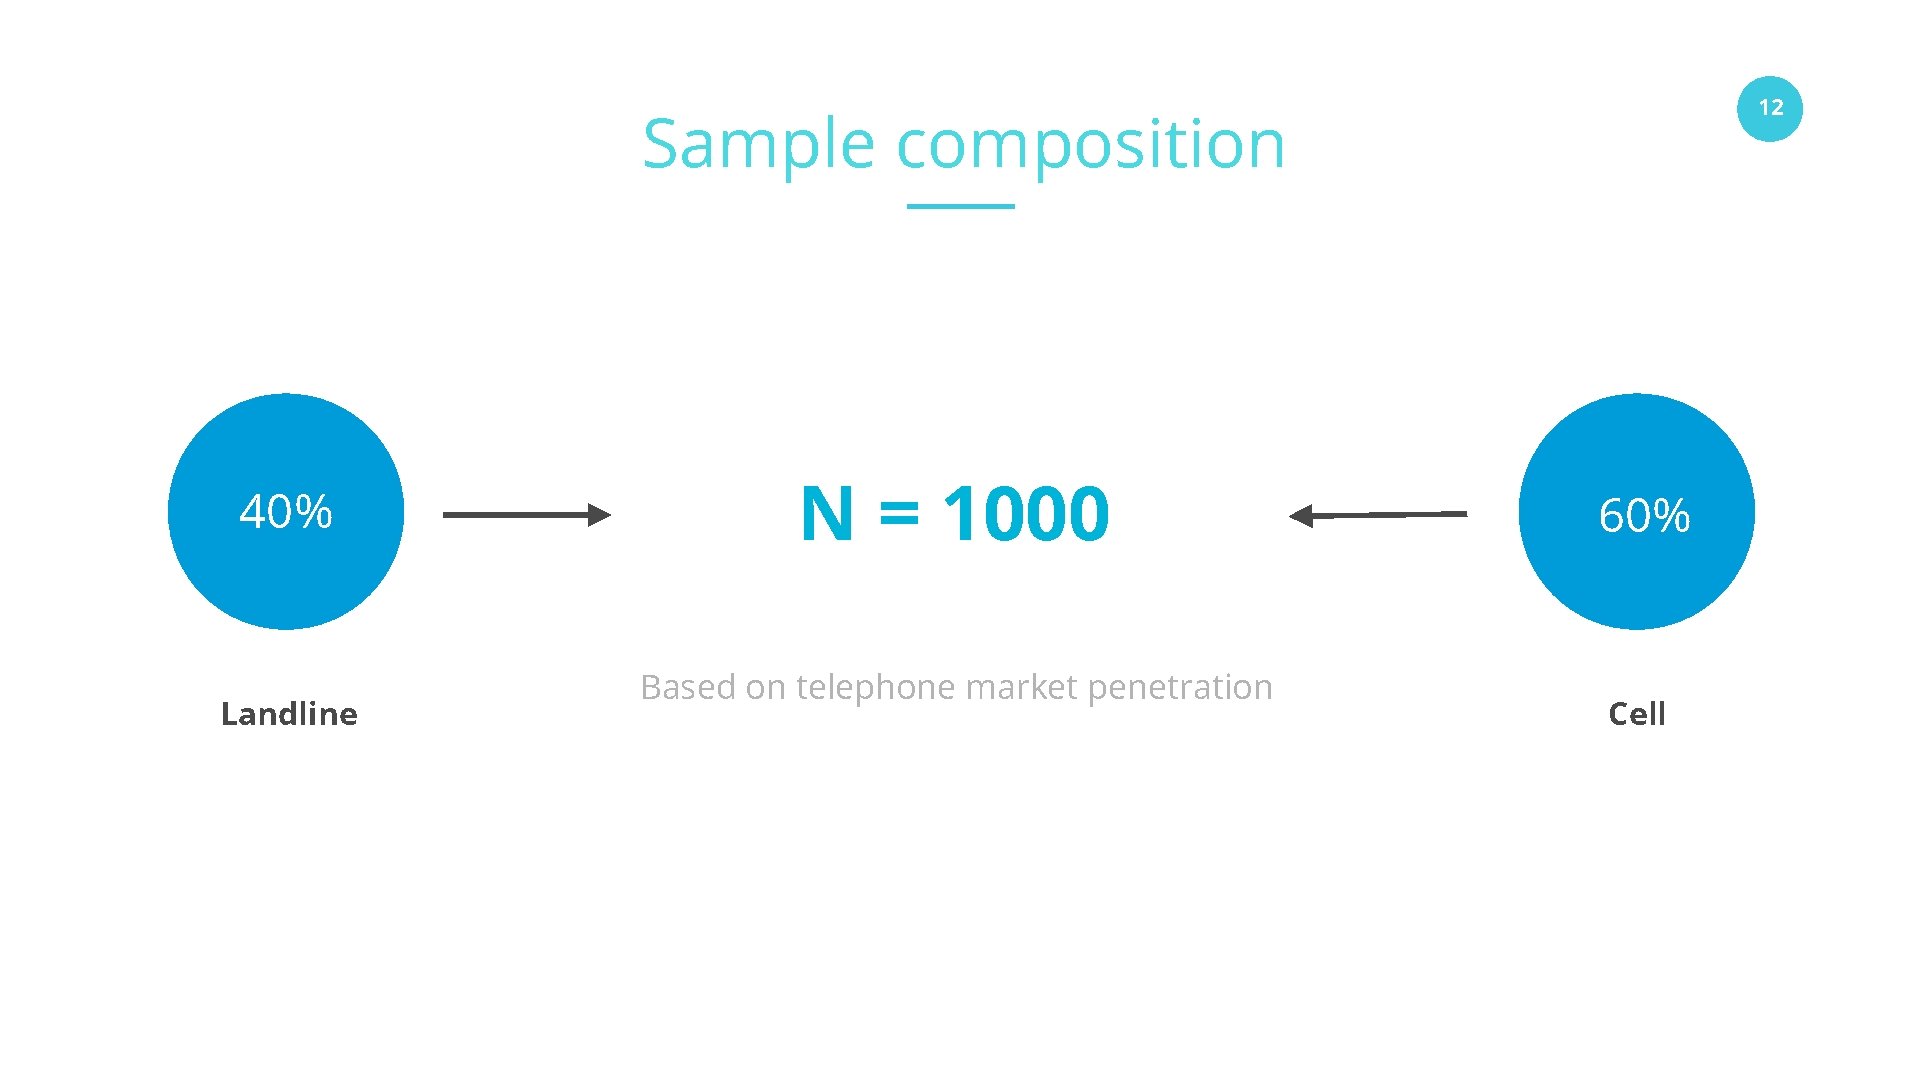 12 Sample composition 40% Landline N = 1000 Based on telephone market penetration www.